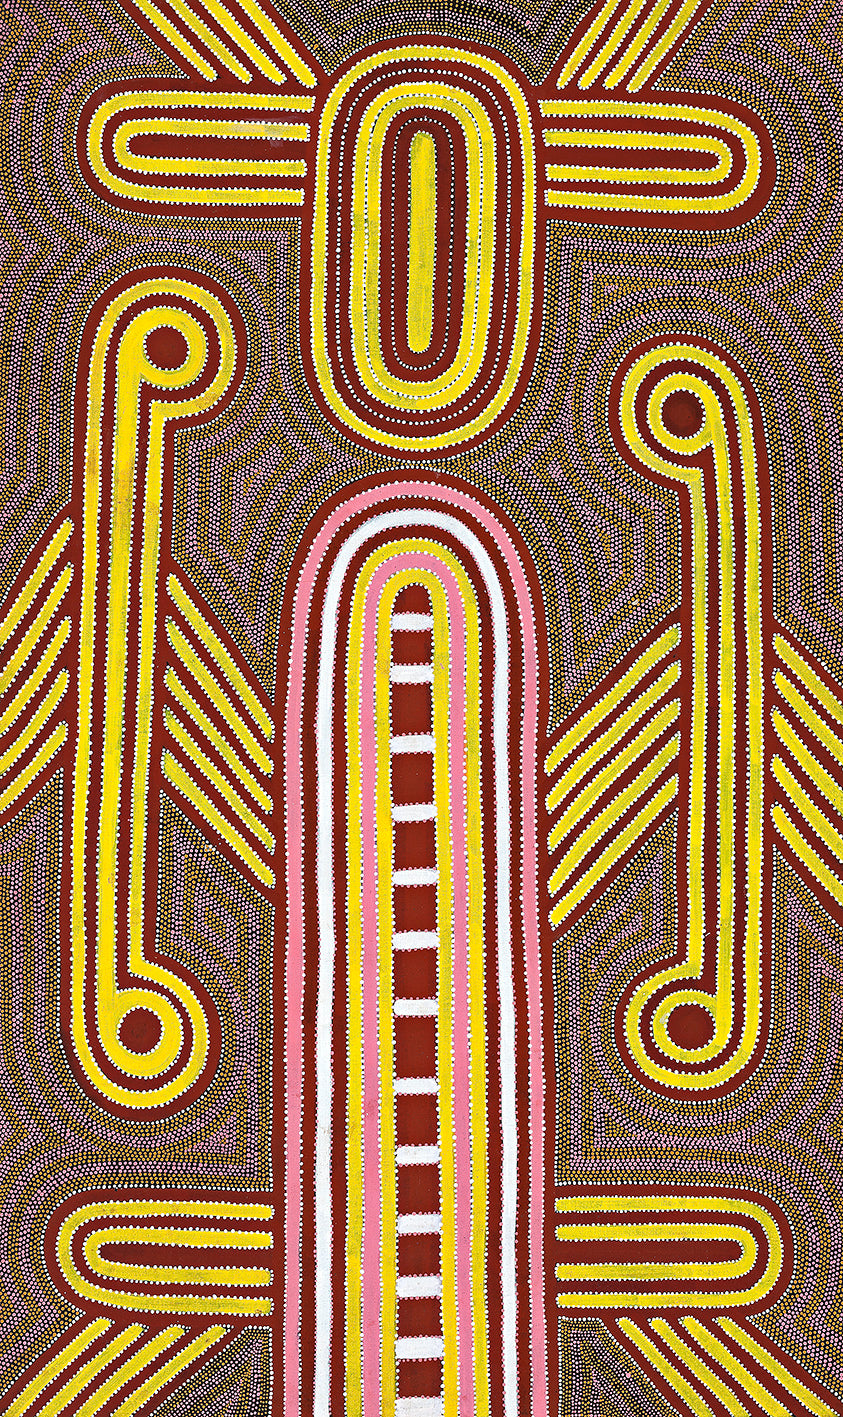 Australian Aboriginal Art Painting by Louie Pwerle of Utopia in 1996.